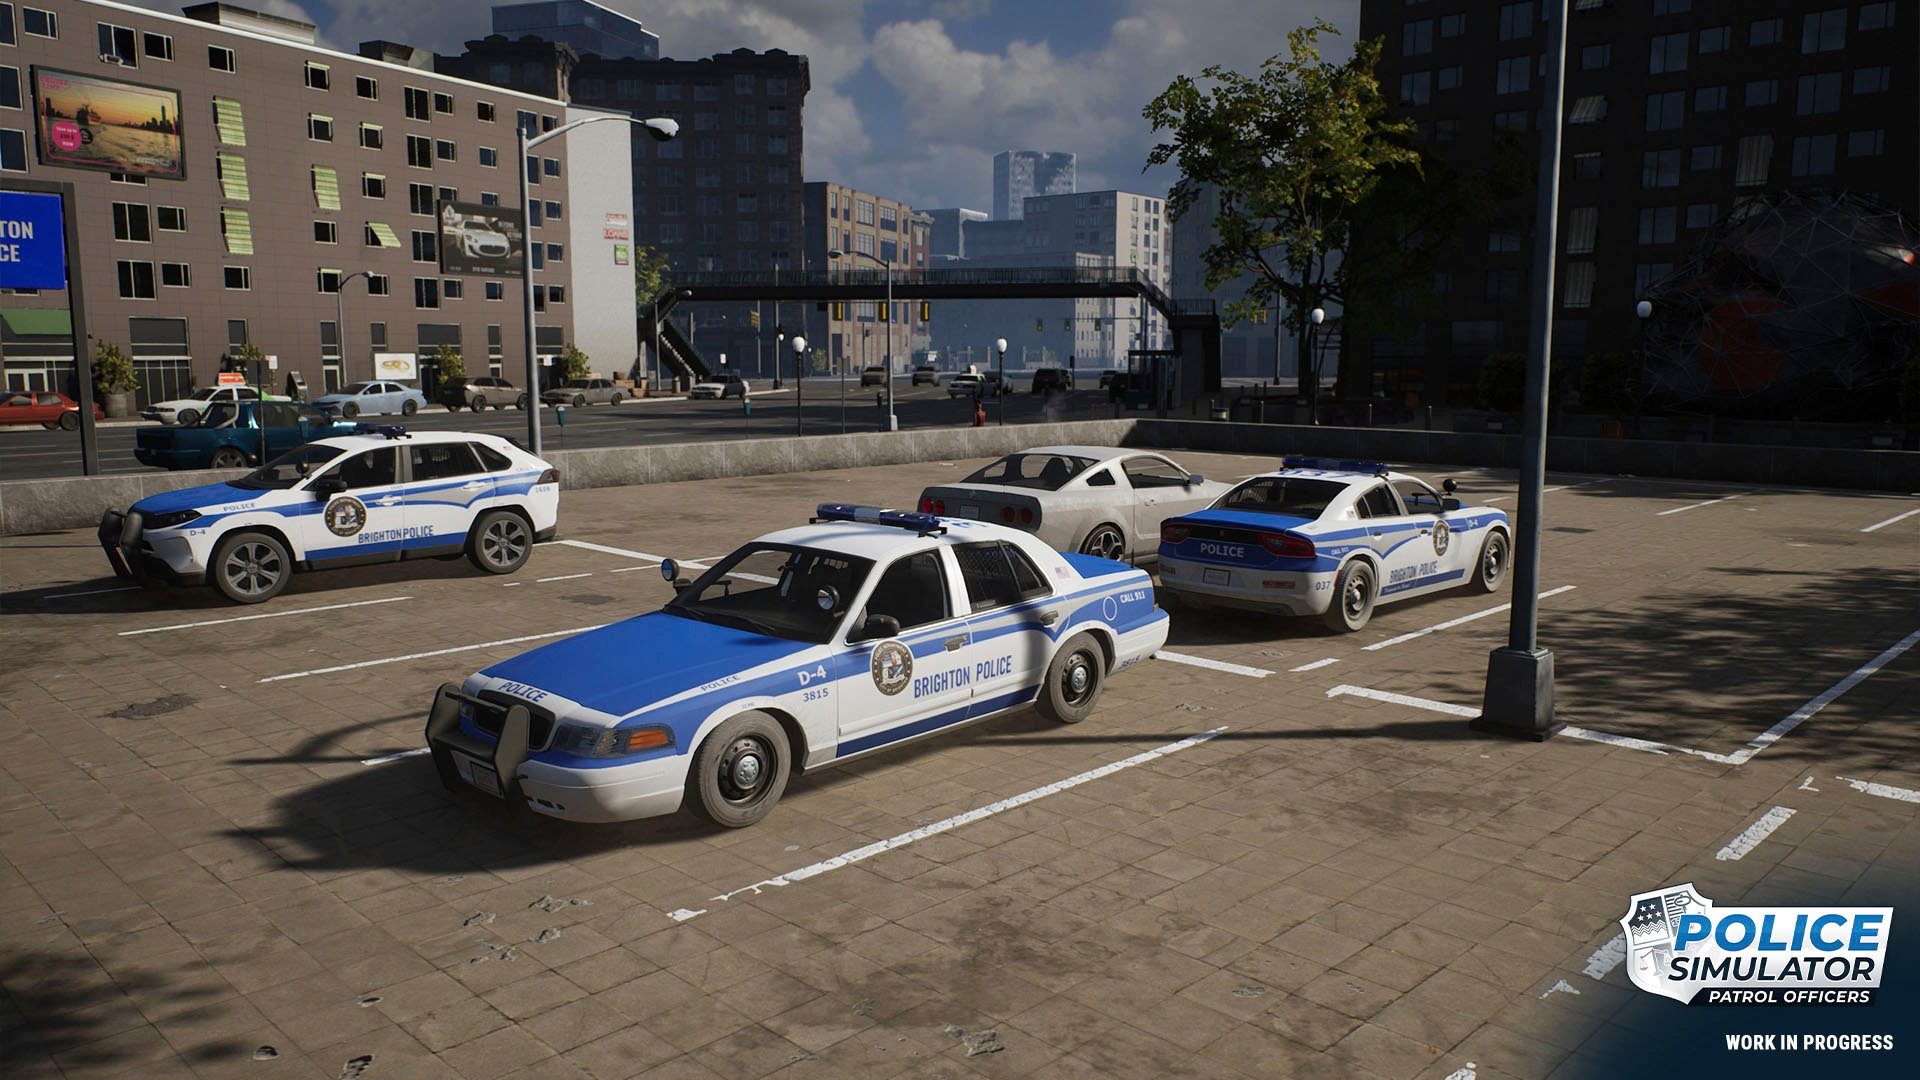 PlayStation 4 Simulator: Patrol Astragon Police Officers